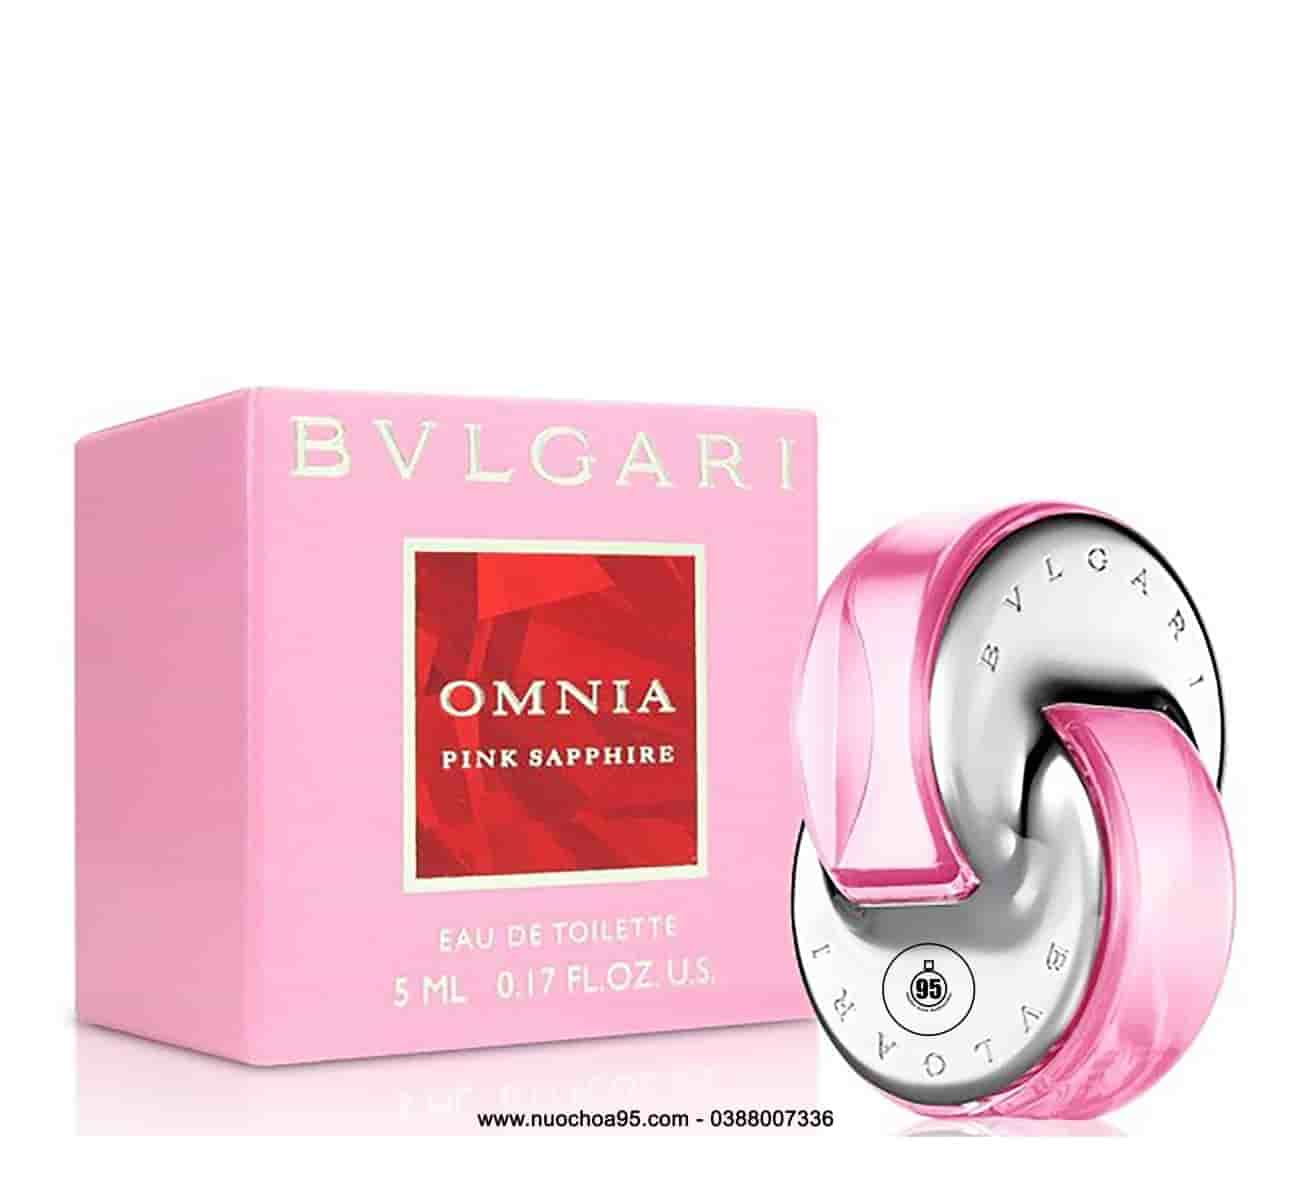 Nước hoa Bvlgari Omnia Pink Sapphire